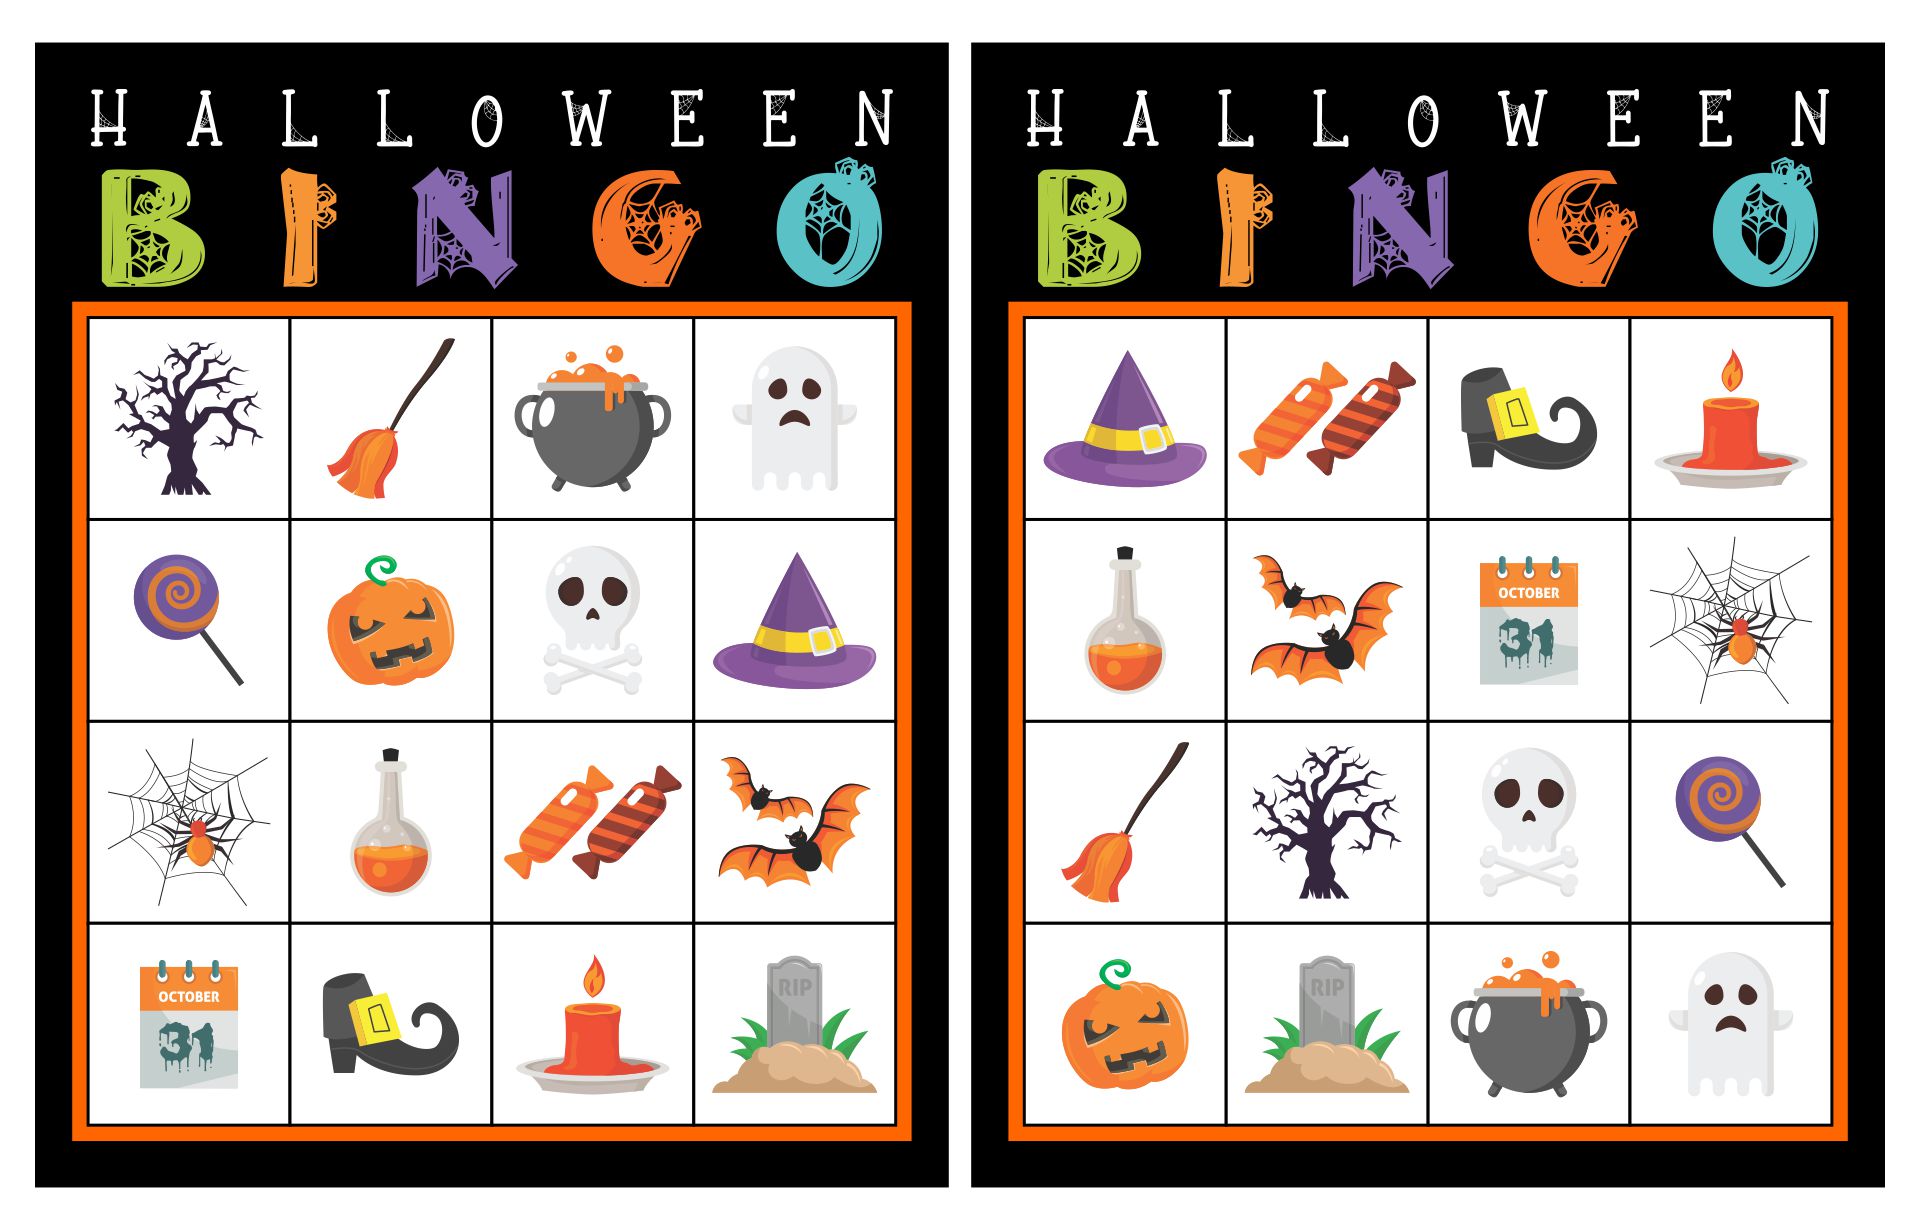 DIY Halloween Costume Bingo